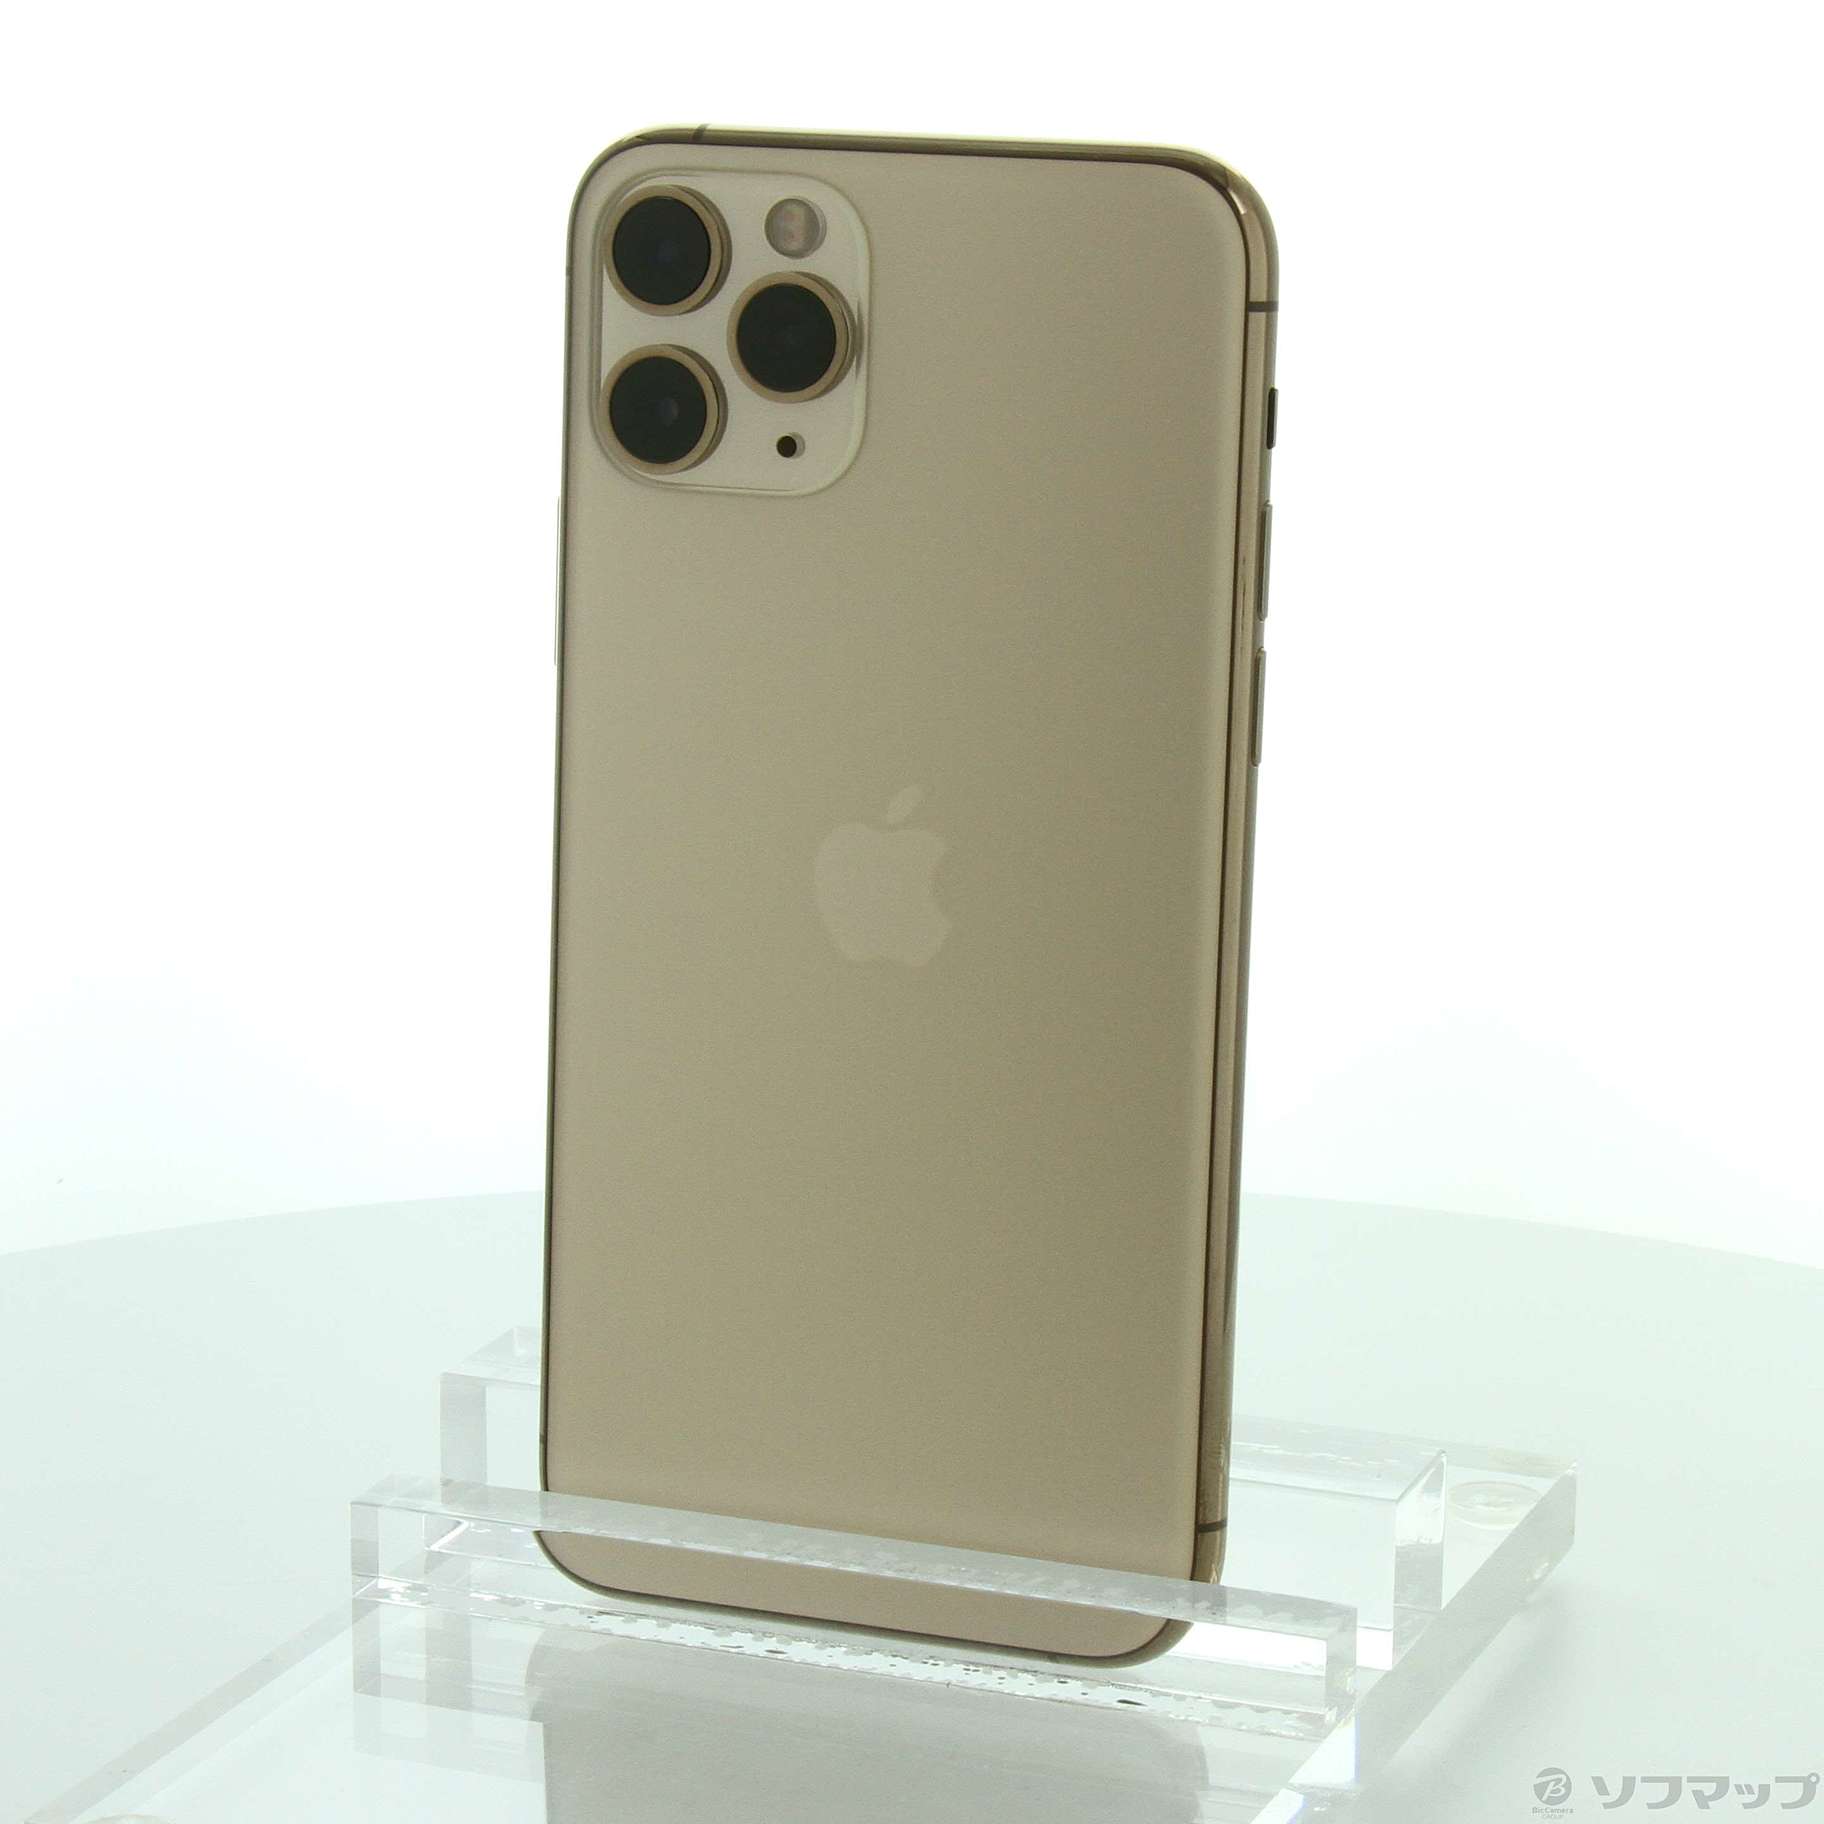 中古】iPhone11 Pro 256GB ゴールド NWC92J／A SIMフリー ◇02/18(金